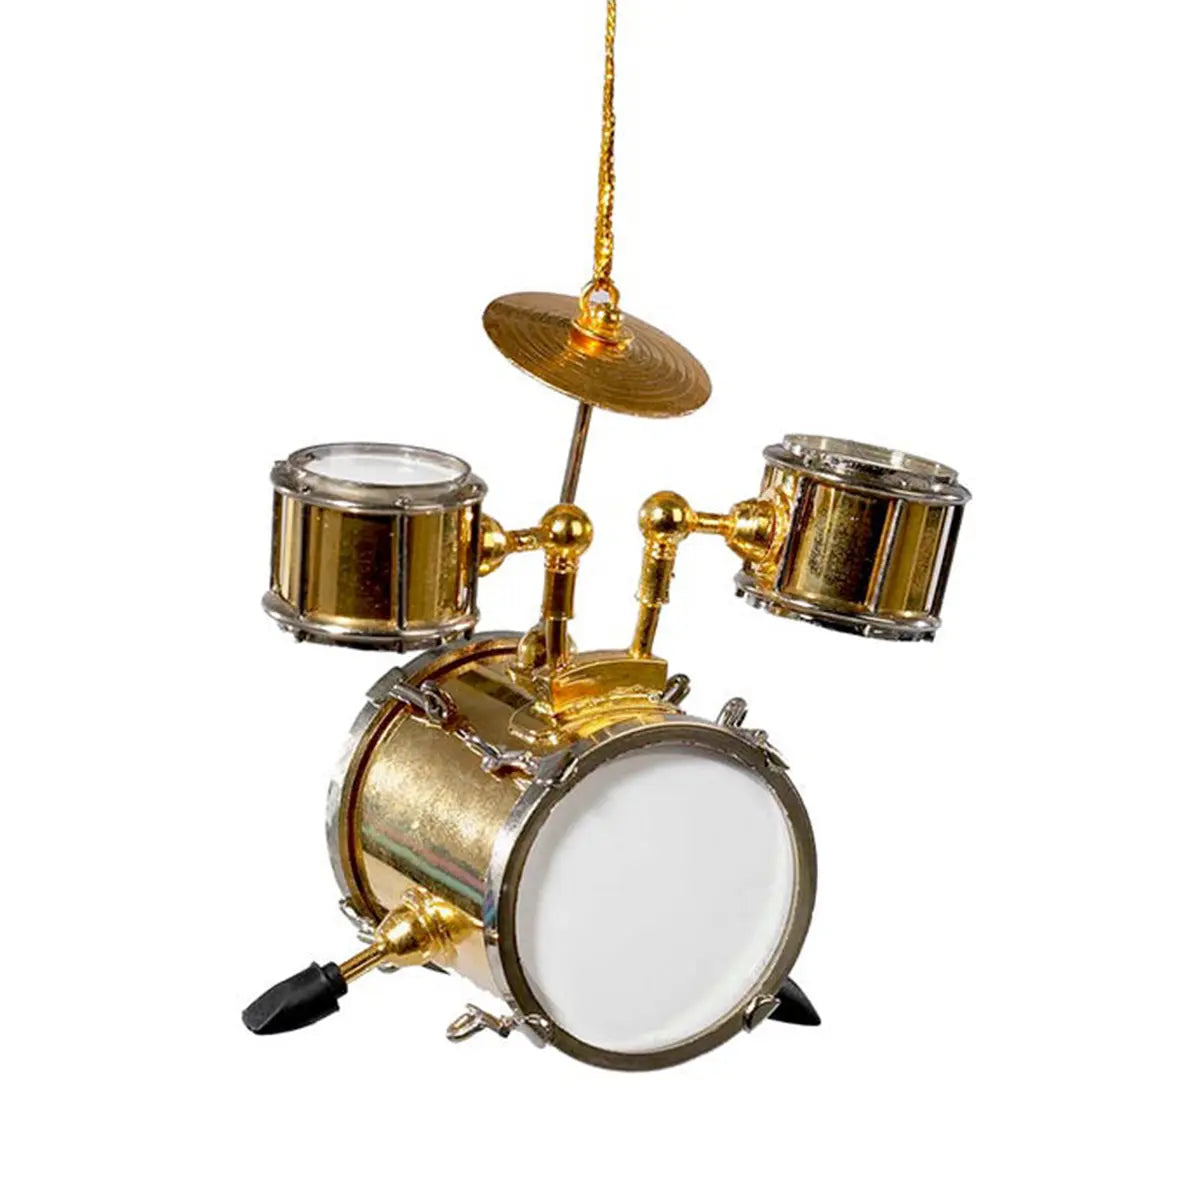 Kurt Adler 2.8 in Brass Musical Drum Ornament